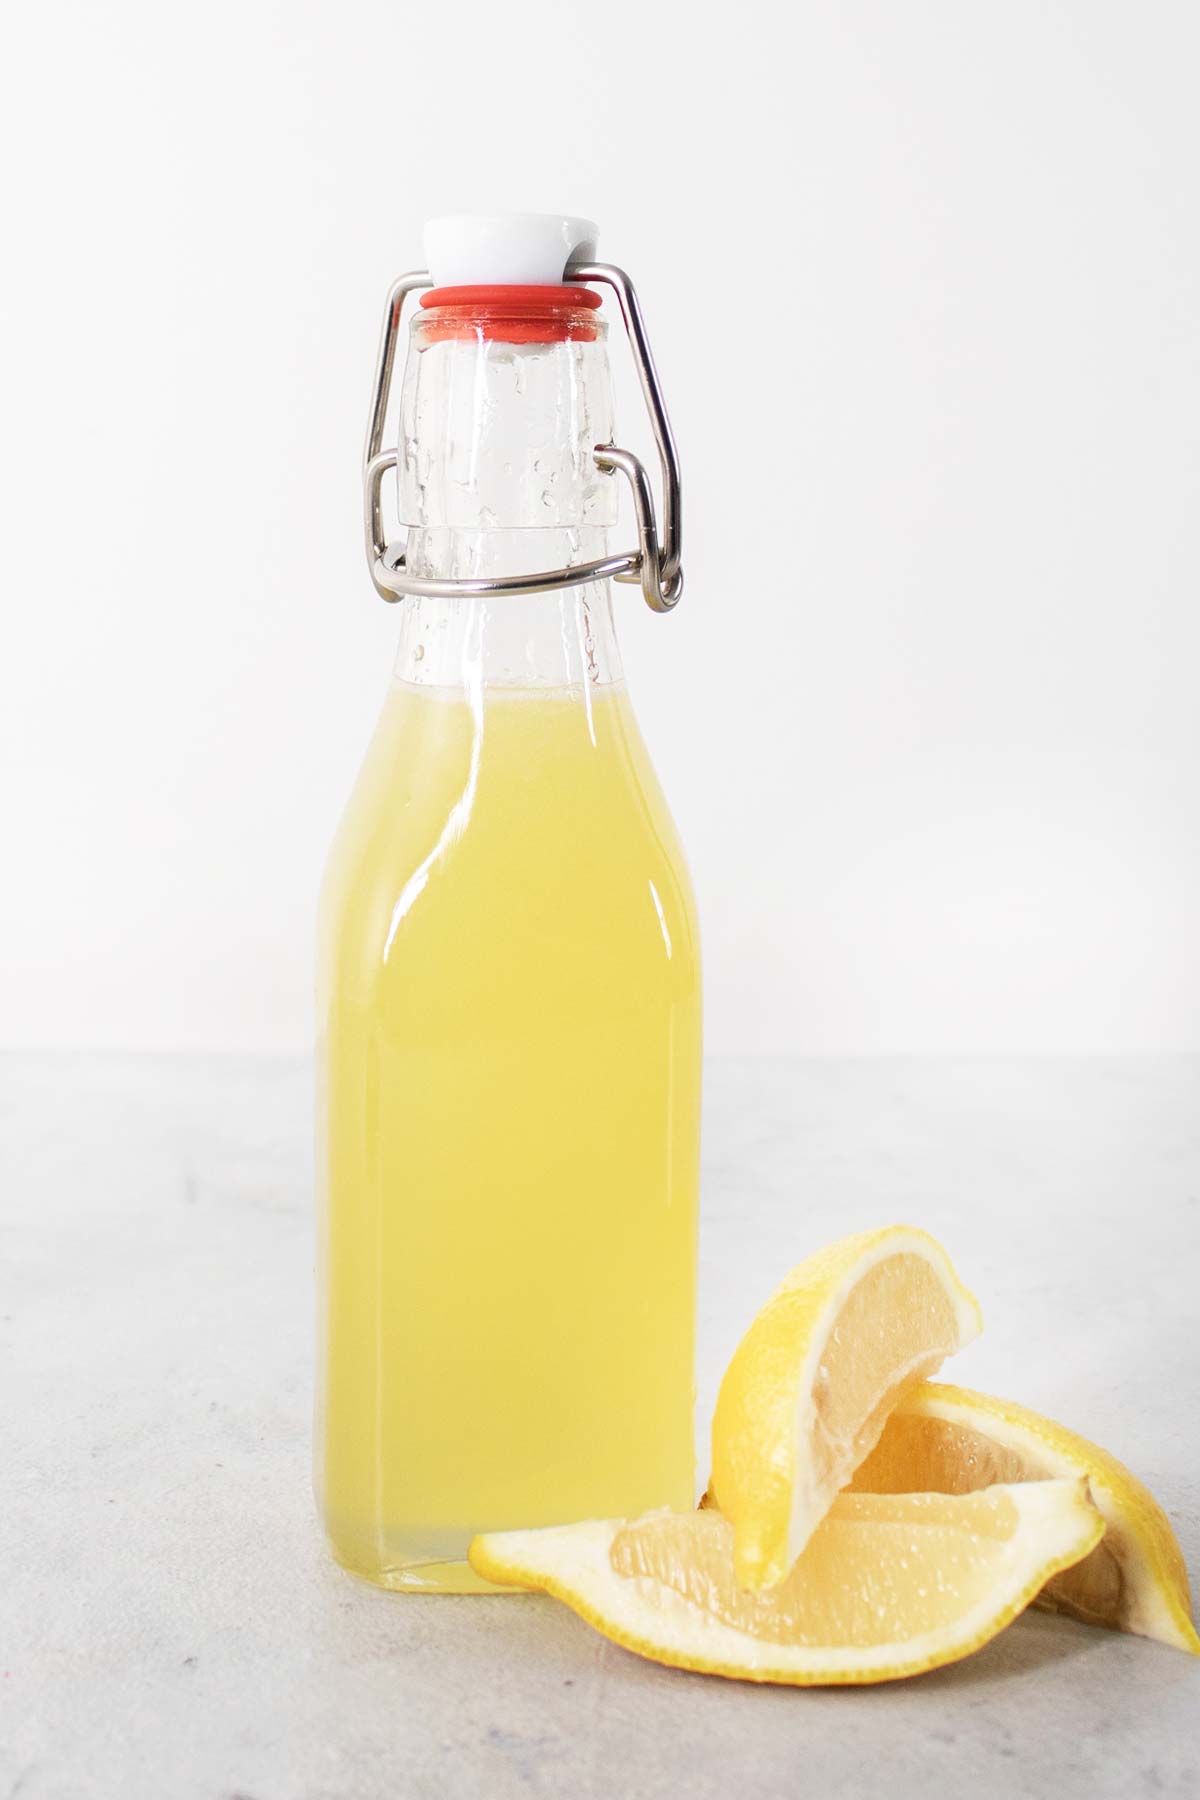 Lemon syrup in a glass bottle.